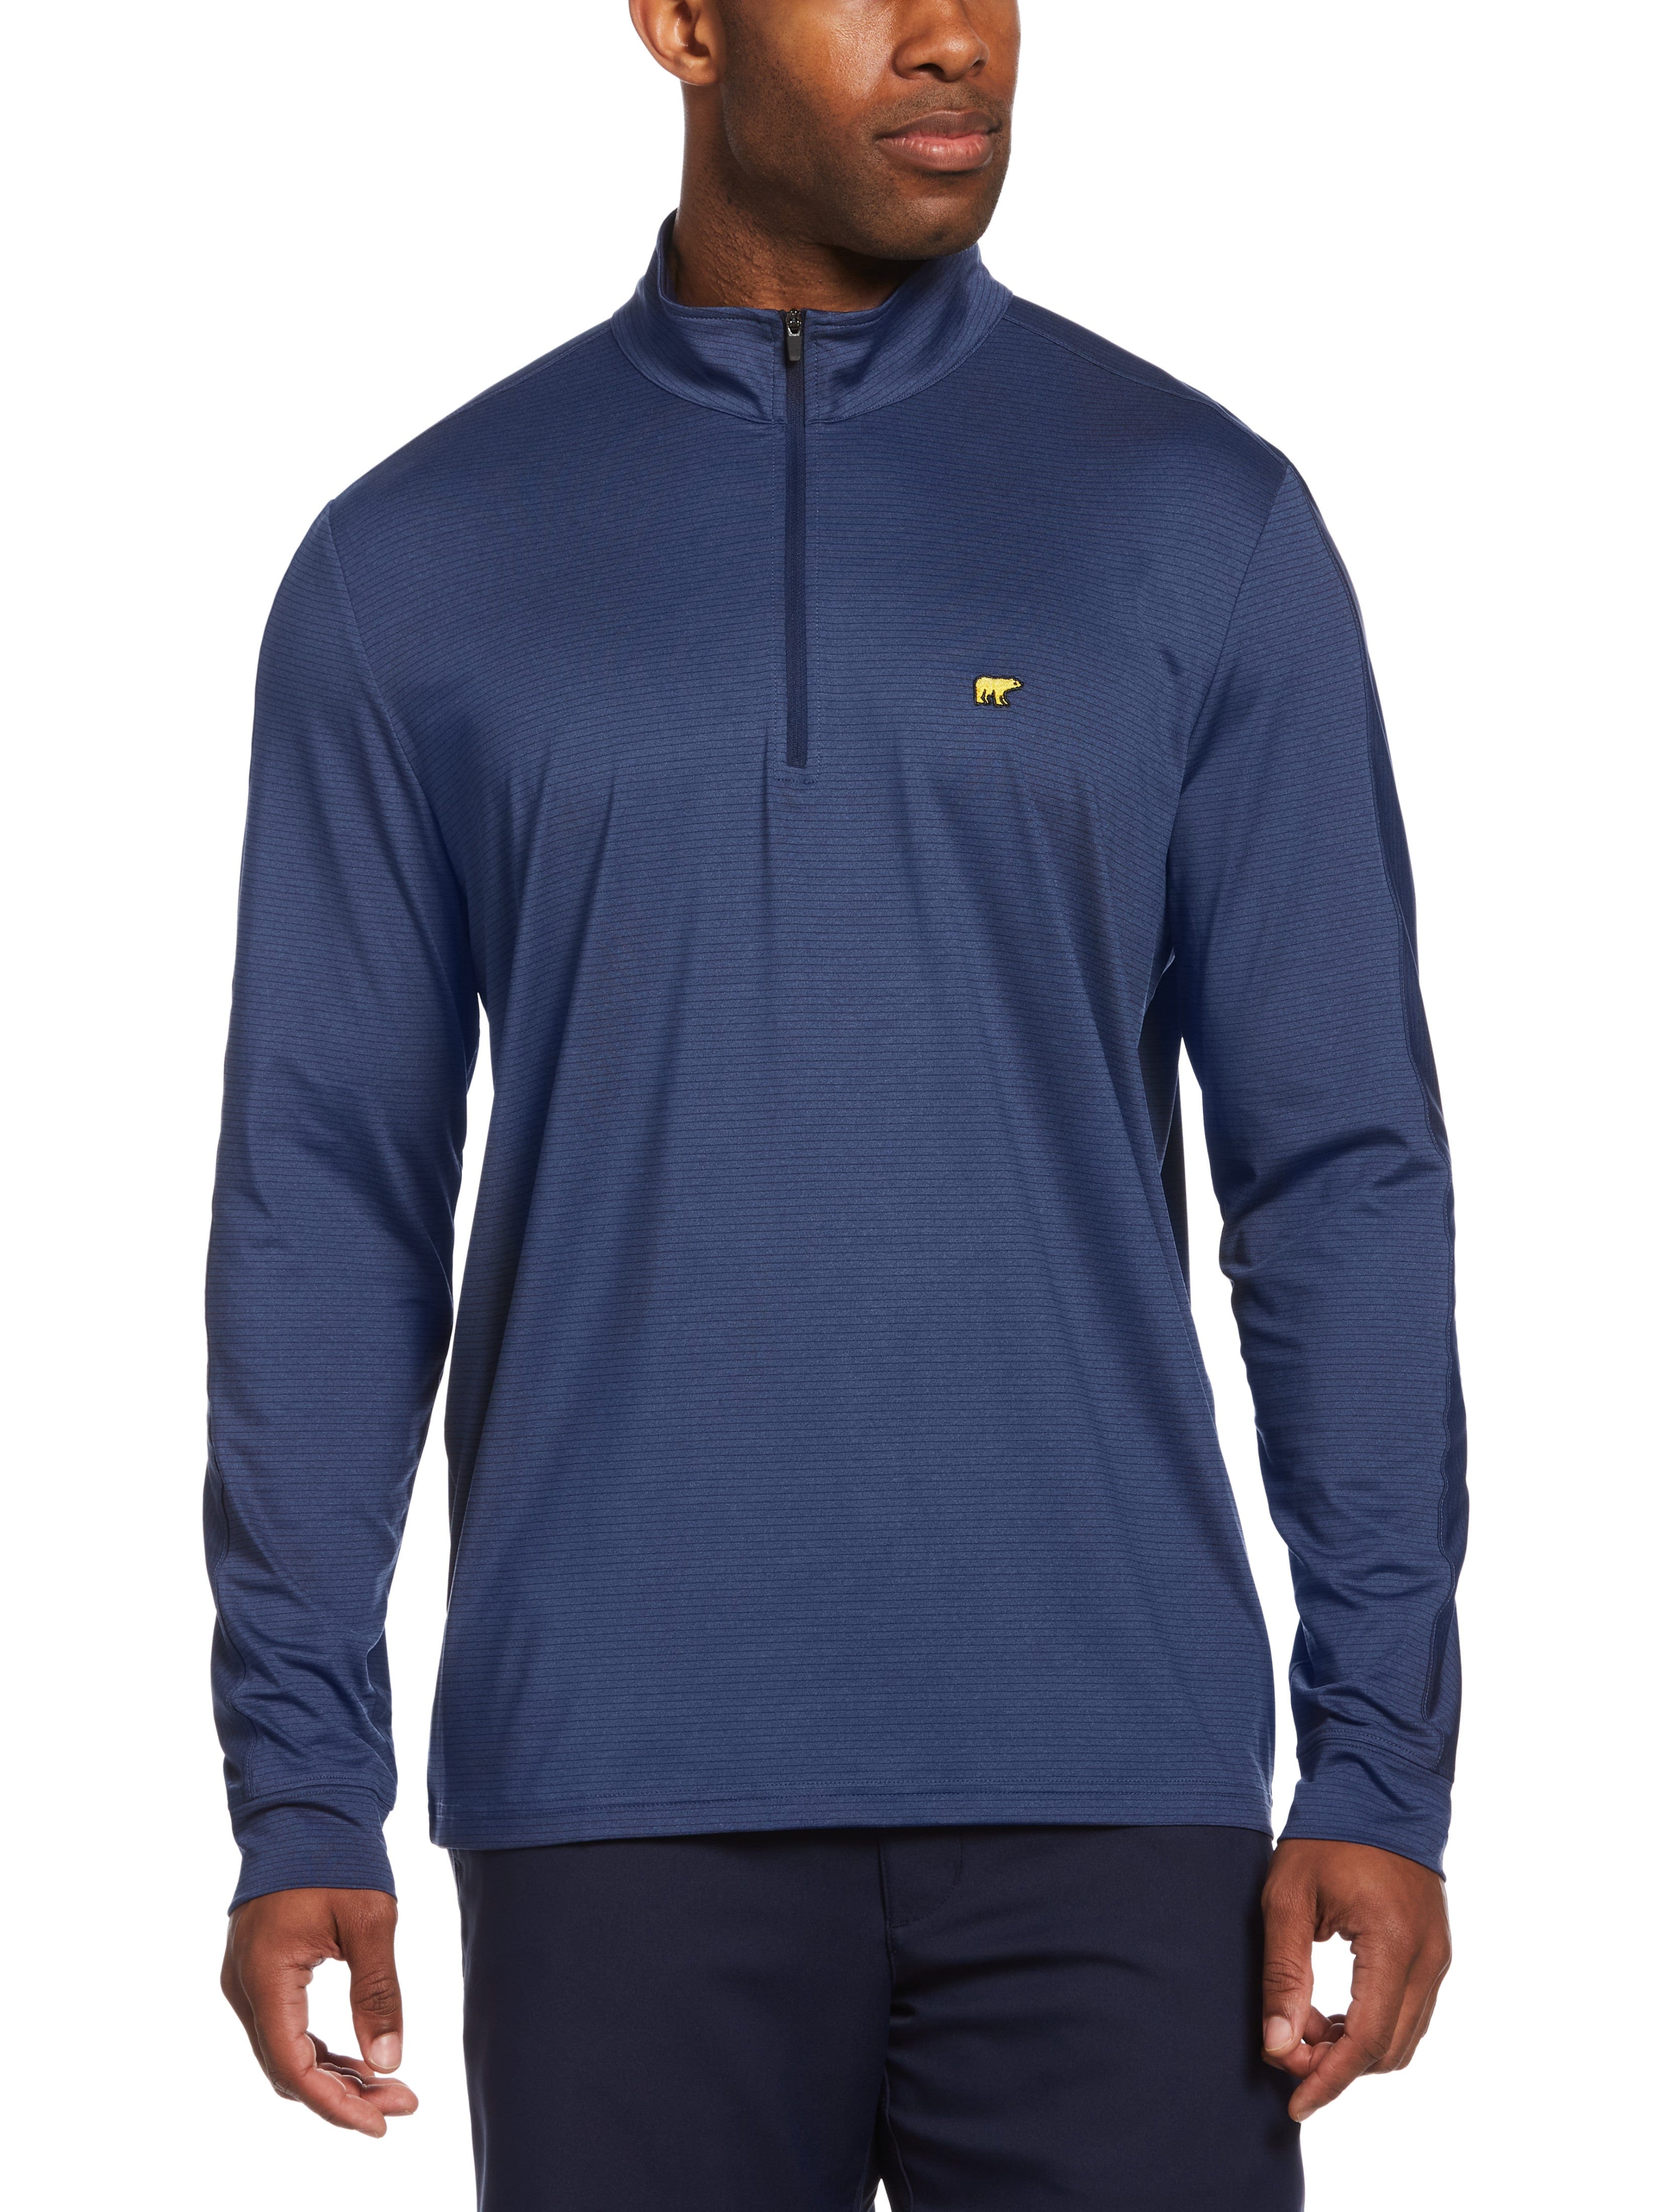 Jack Nicklaus Mens 1/4 Zip Sun Shade Base Layer Golf Shirt, Size Medium, Peacoat Heather Brown, Polyester/Elastane | Golf Apparel Shop